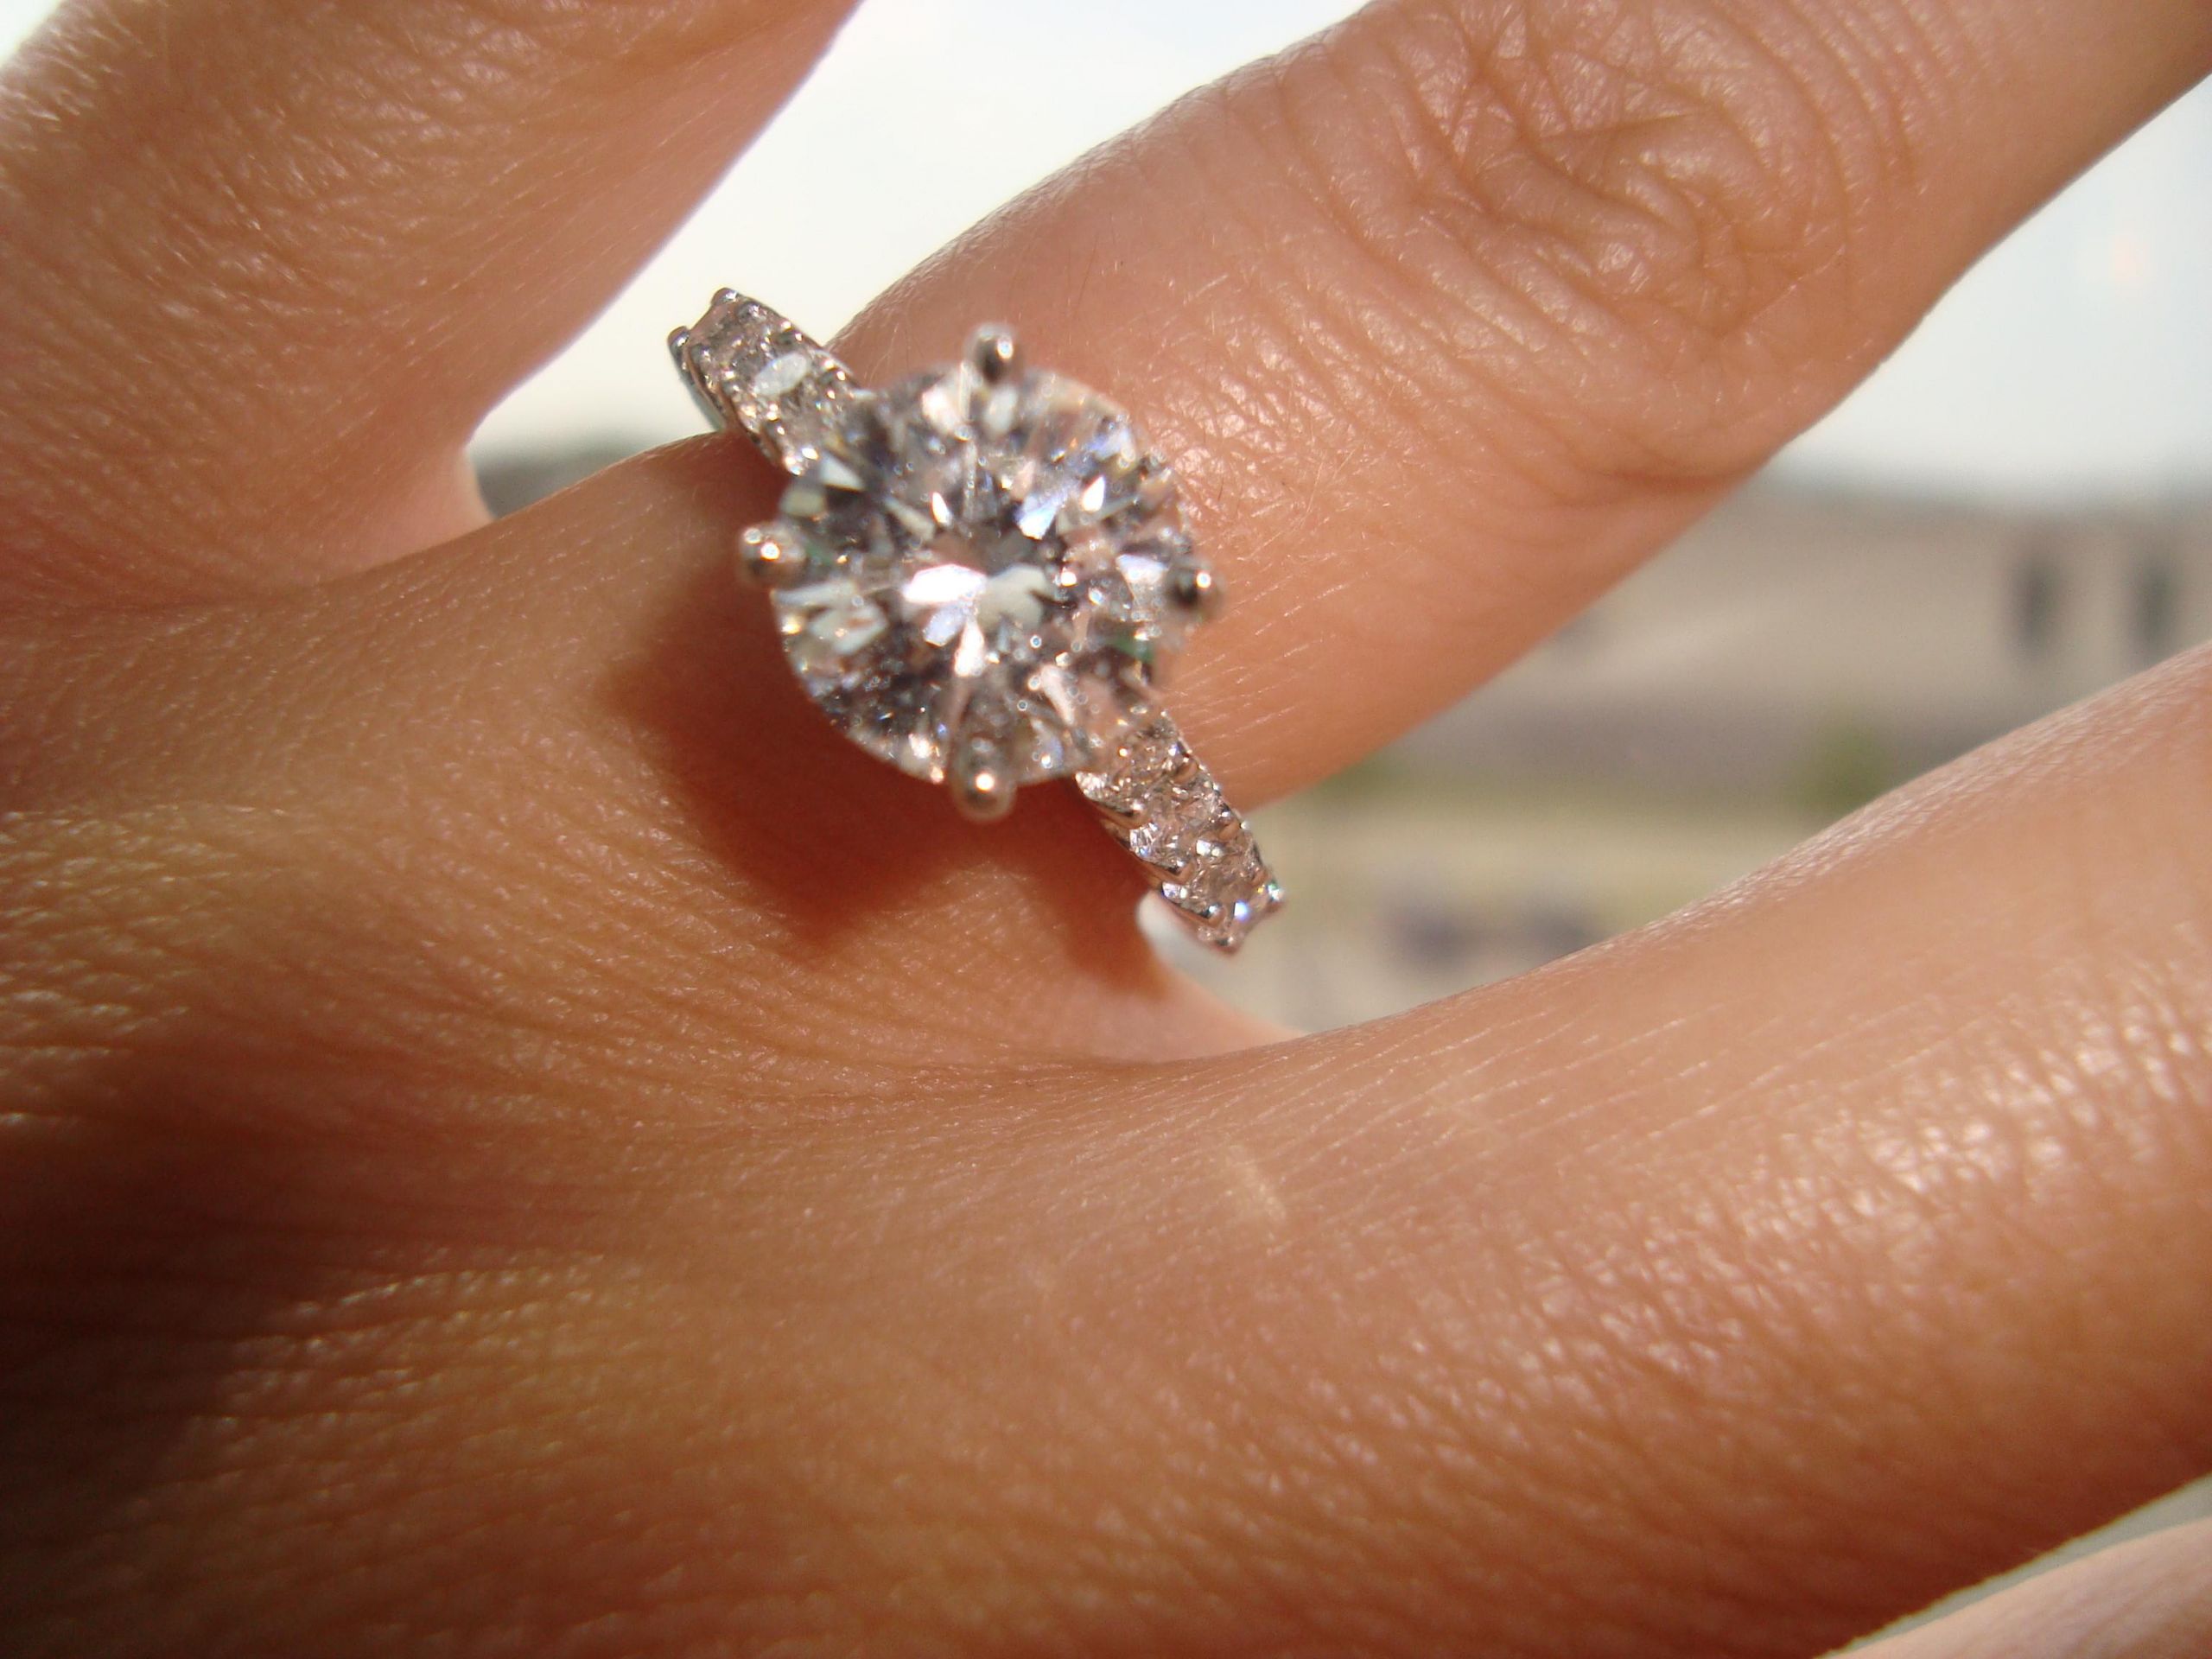 2 Carat Cushion Cut Diamond Engagement Ring
 2 carat cushion cut diamond engagement ring